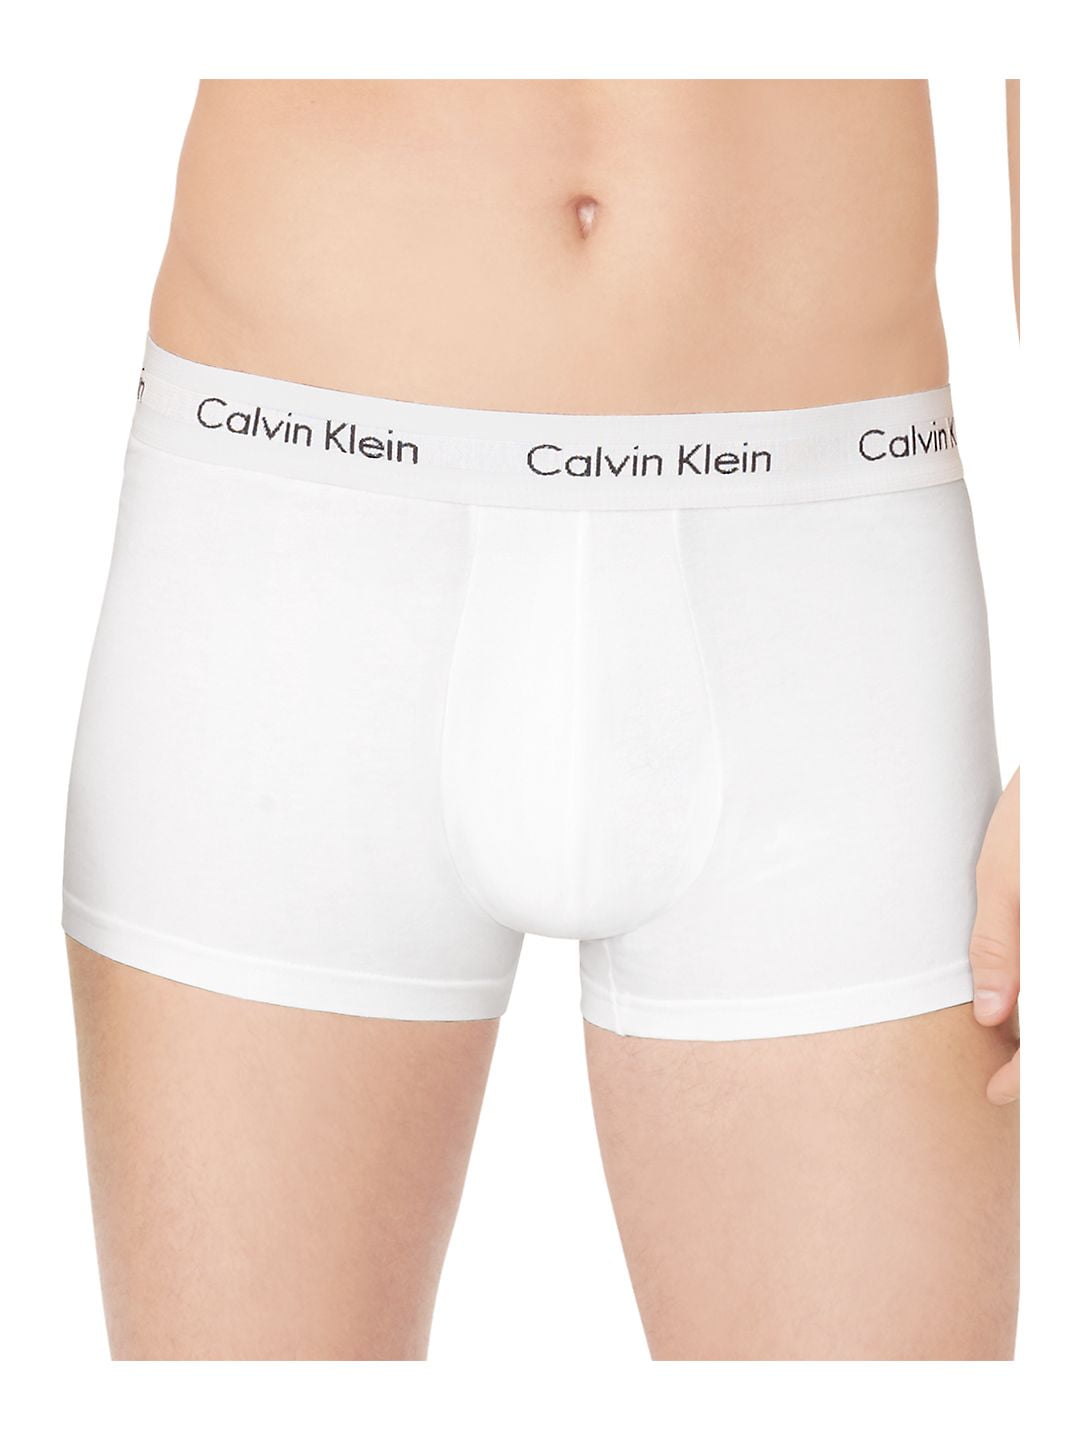 Calvin Klein Men's Cotton Stretch Low-Rise Trunks 3-Pack NU2664